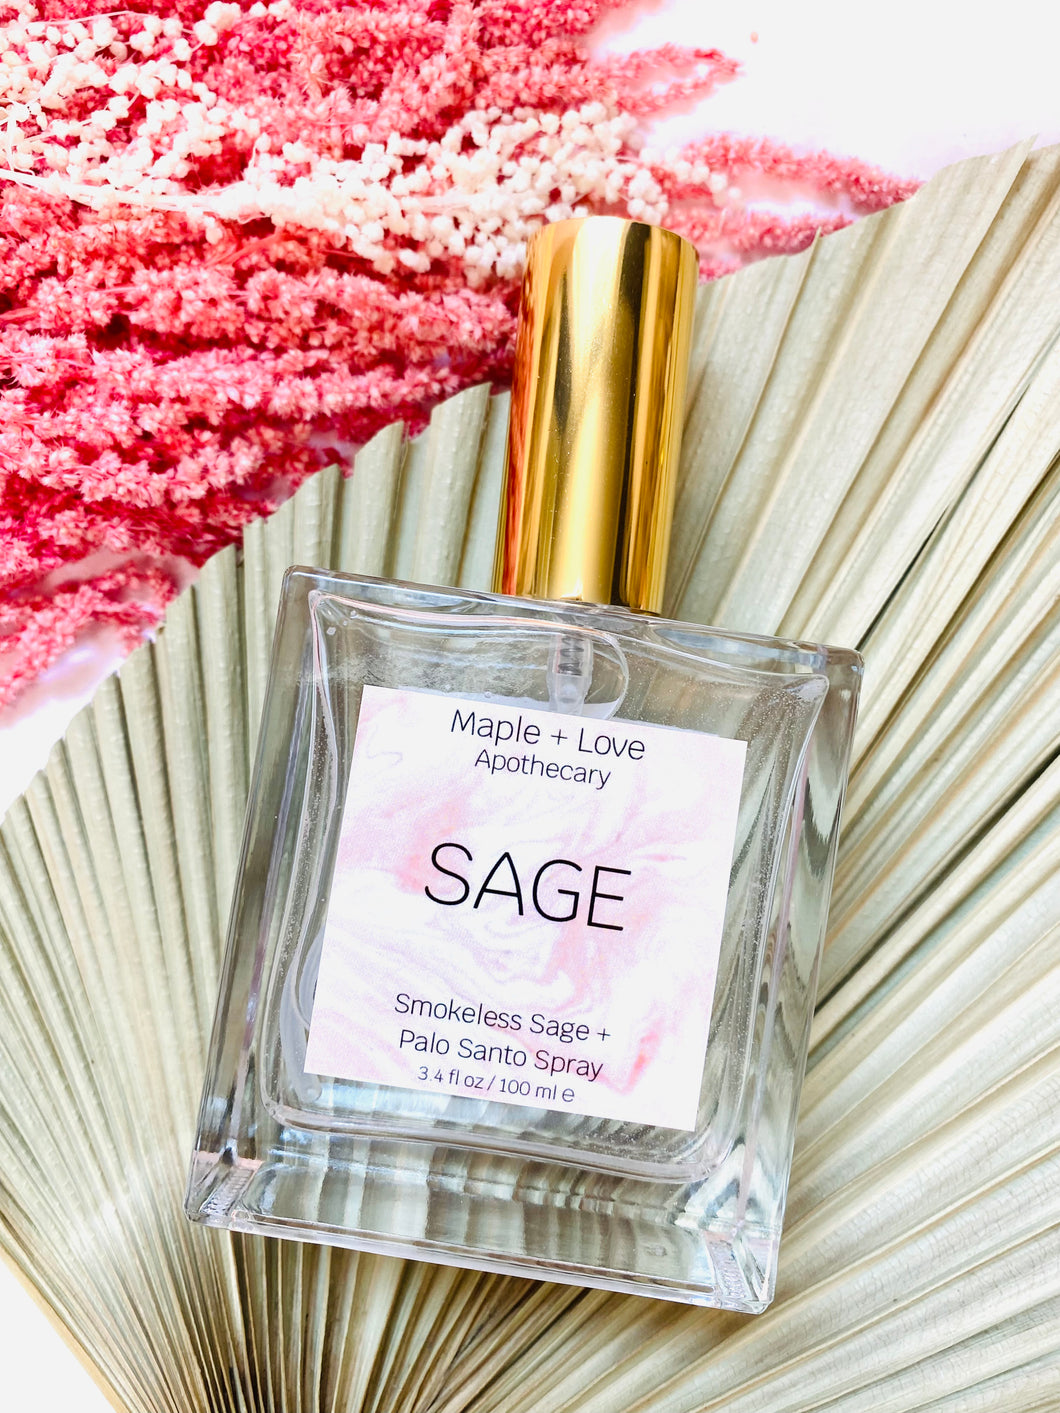 SAGE - Sage + Palo Santo Spray